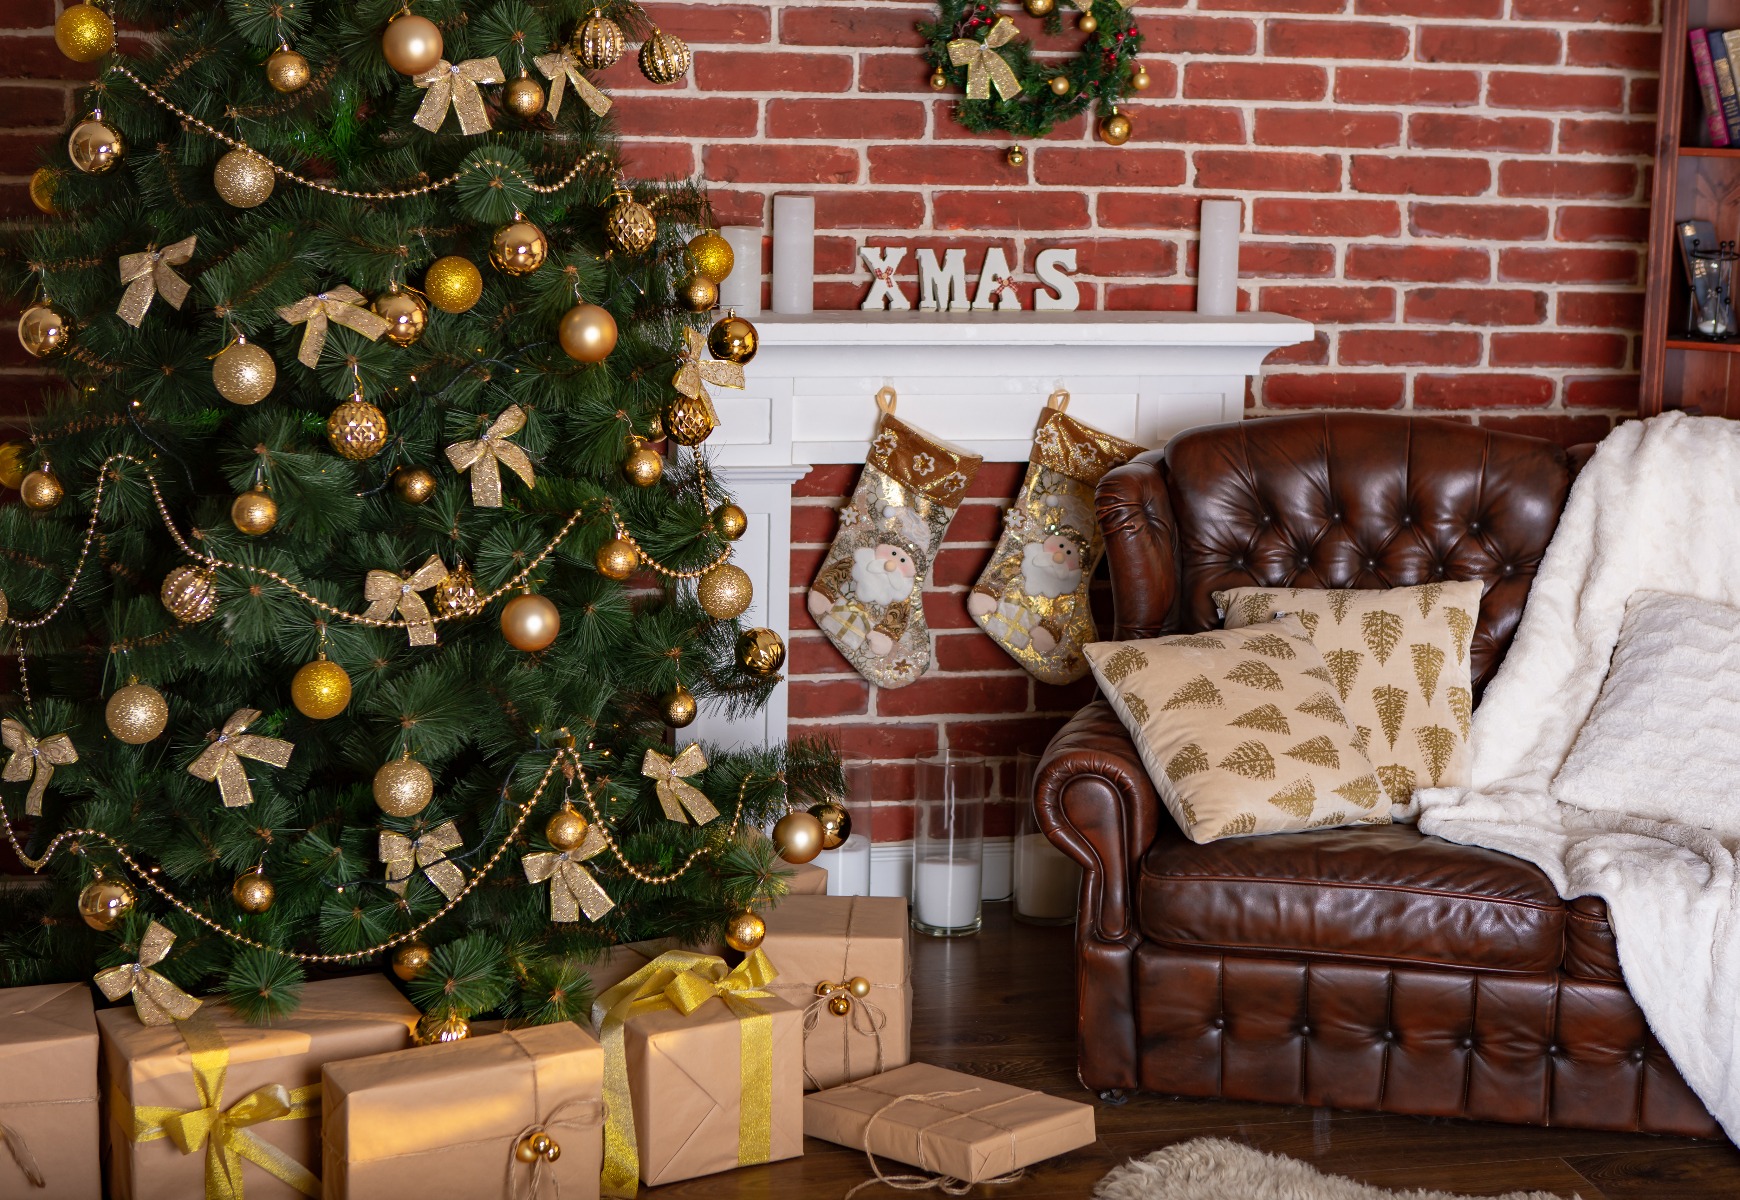 Presents prepared under Christmas tree